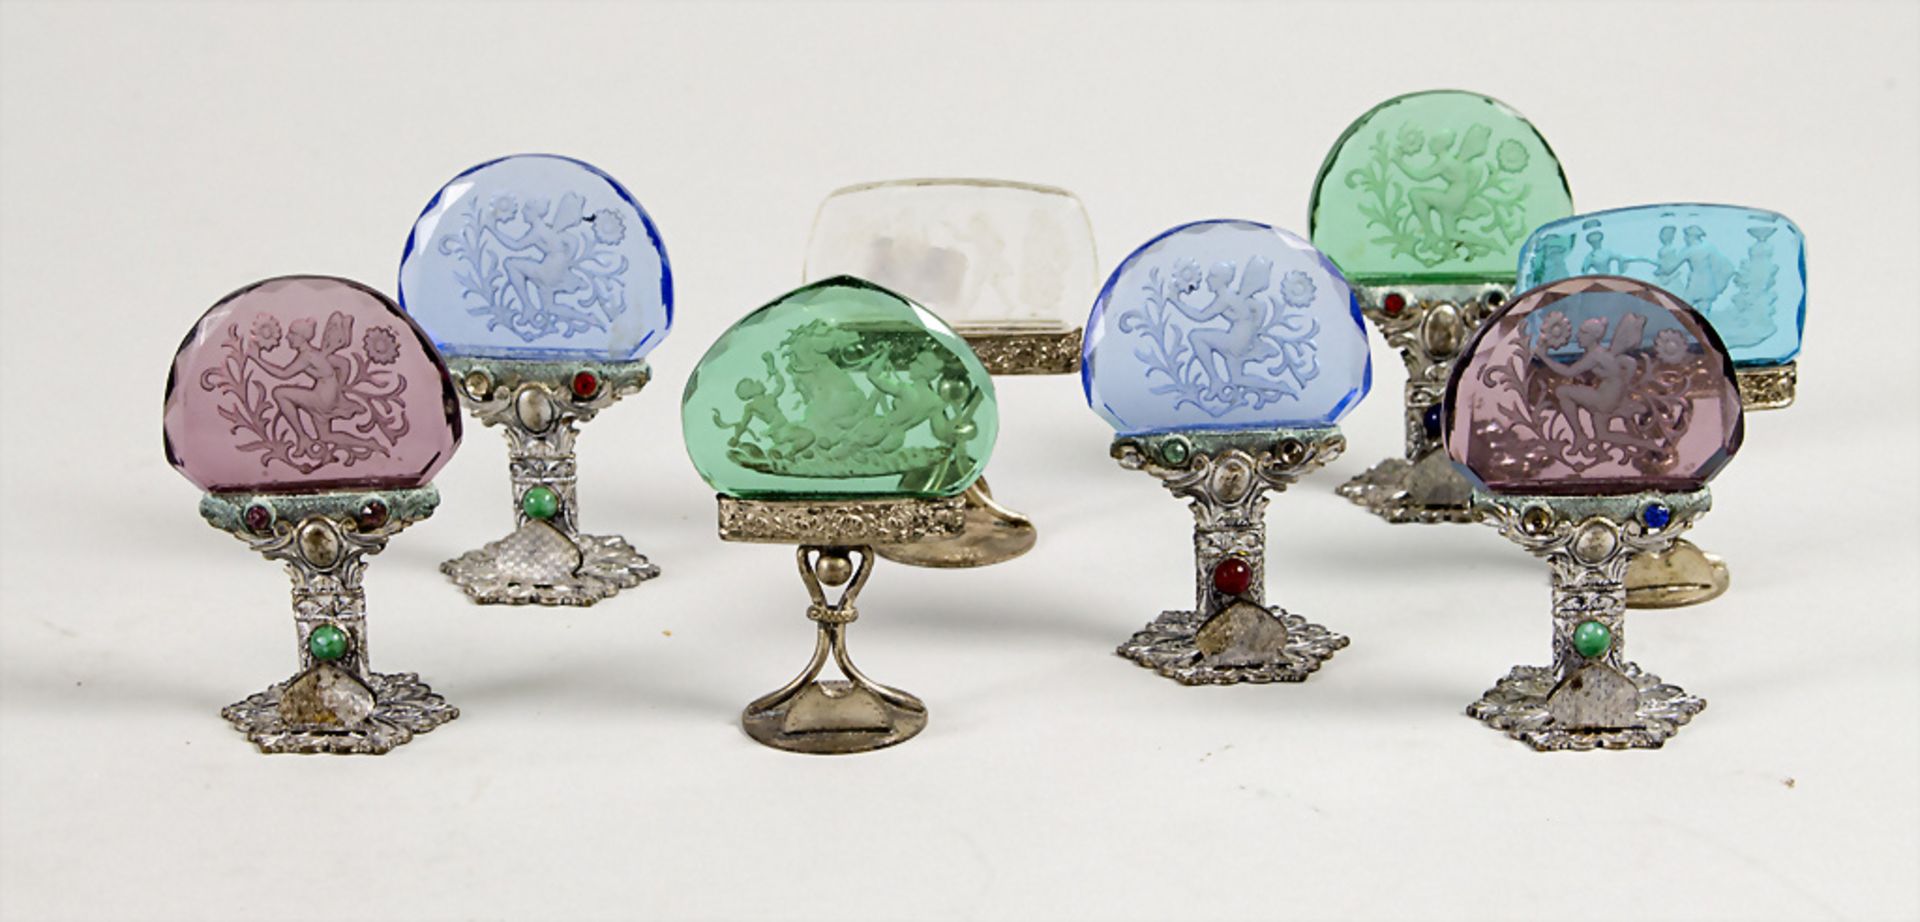 8 Jugendstil Menükartenhalter aus Kristallglas / 8 Art Nouveau crystal glass menu card ...